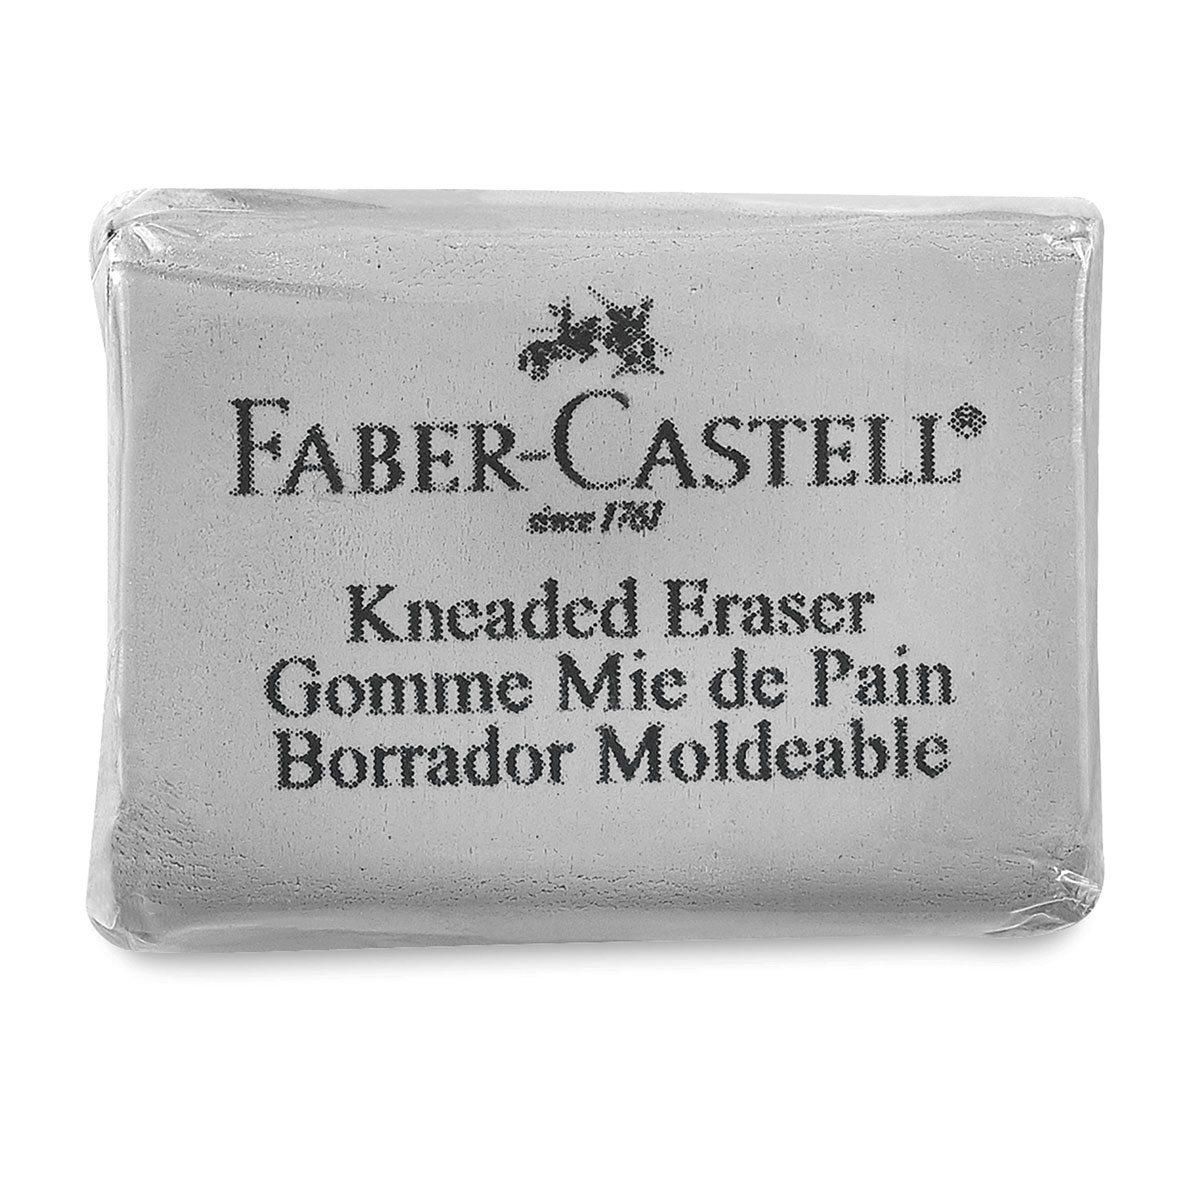 Faber Castell White Eraser for Crayon 